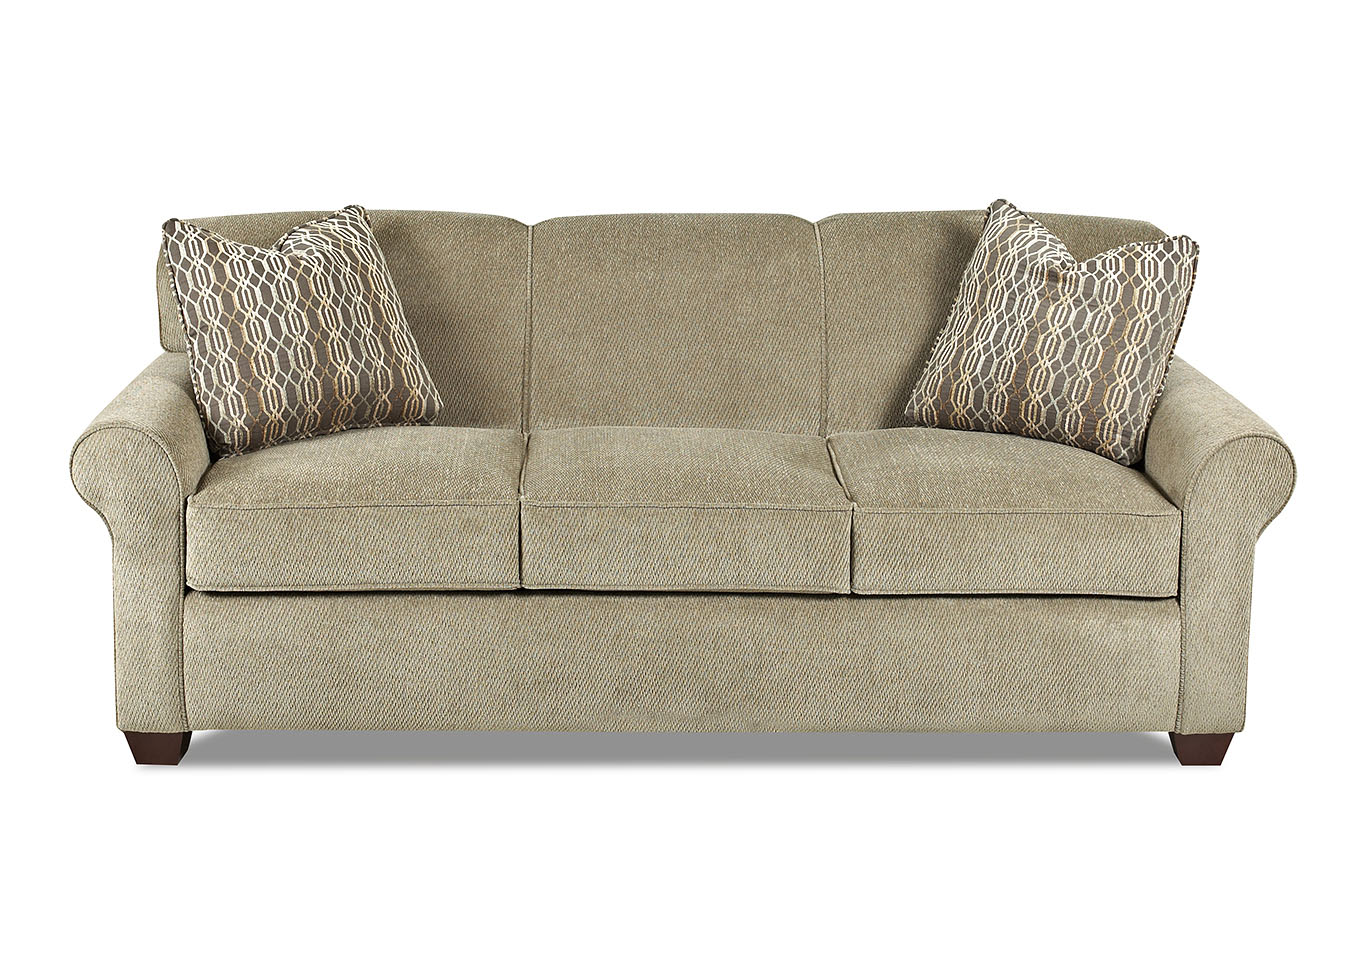 Mayhew Gray Stationary Fabric Sofa,Klaussner Home Furnishings